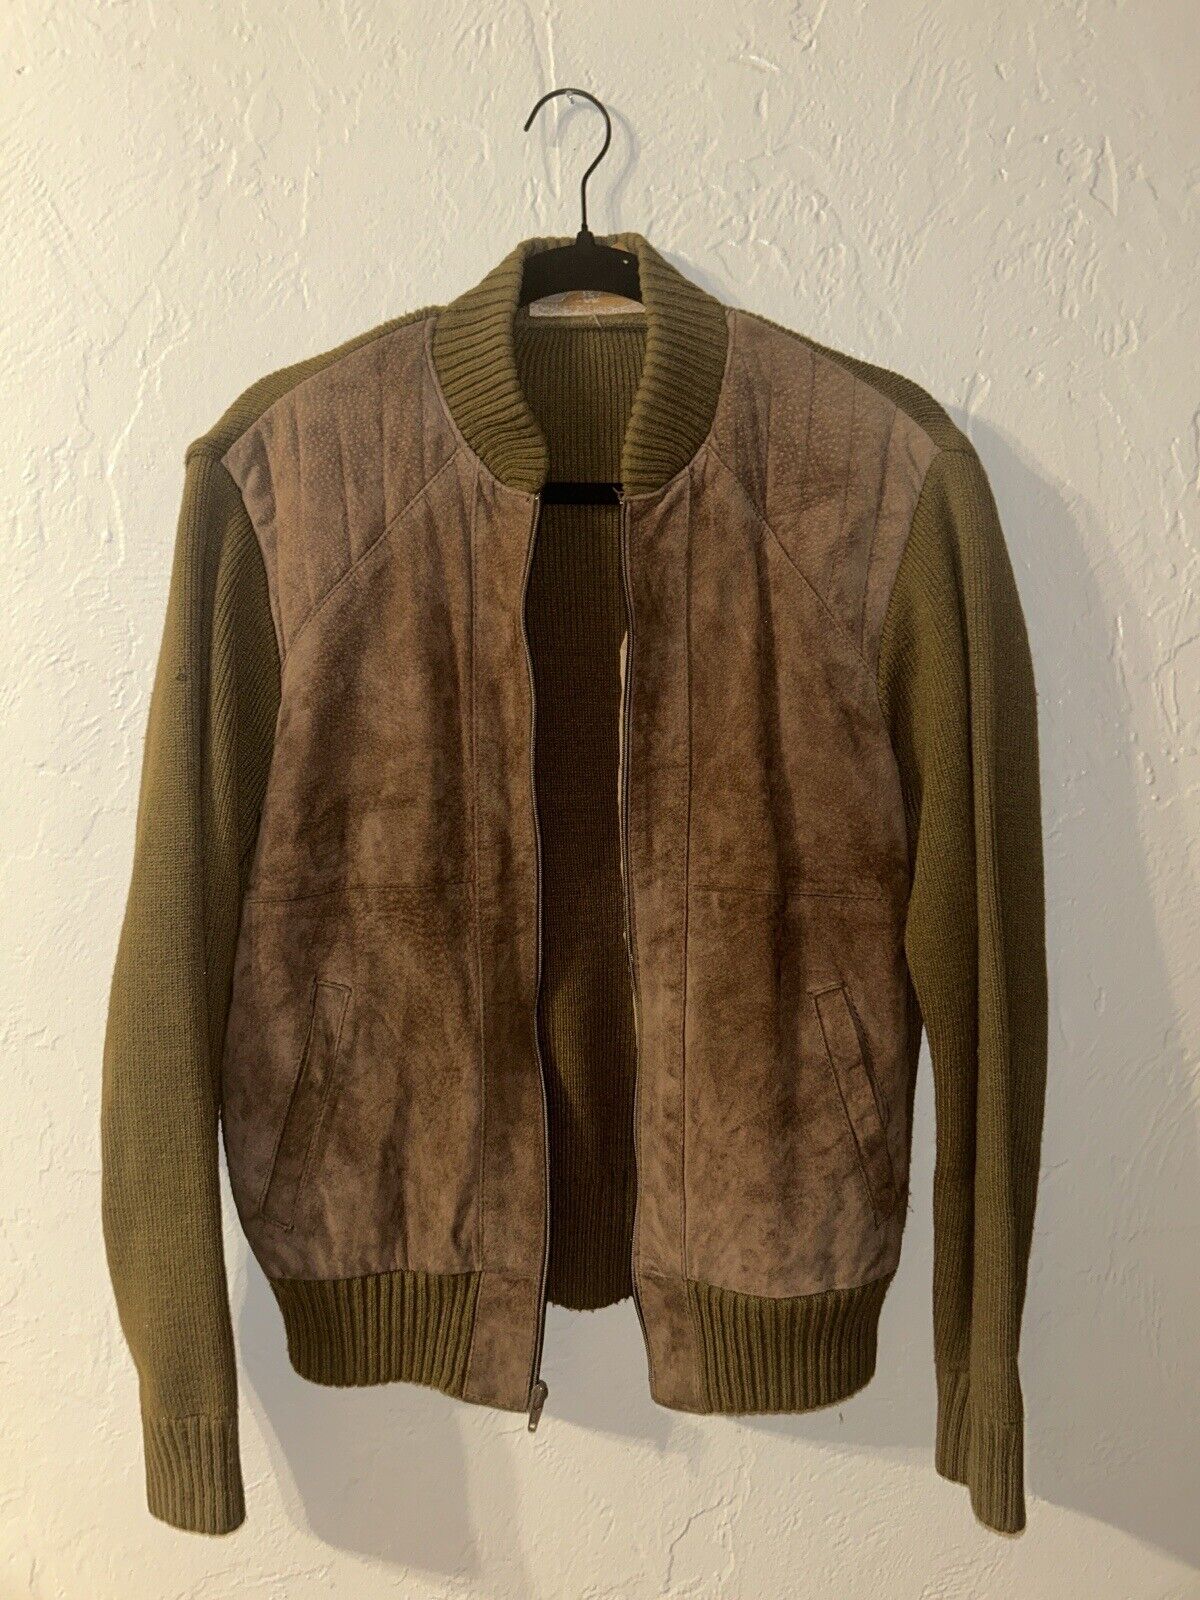 Vintage Van Cort Pigskin Leather Jacket - Size M